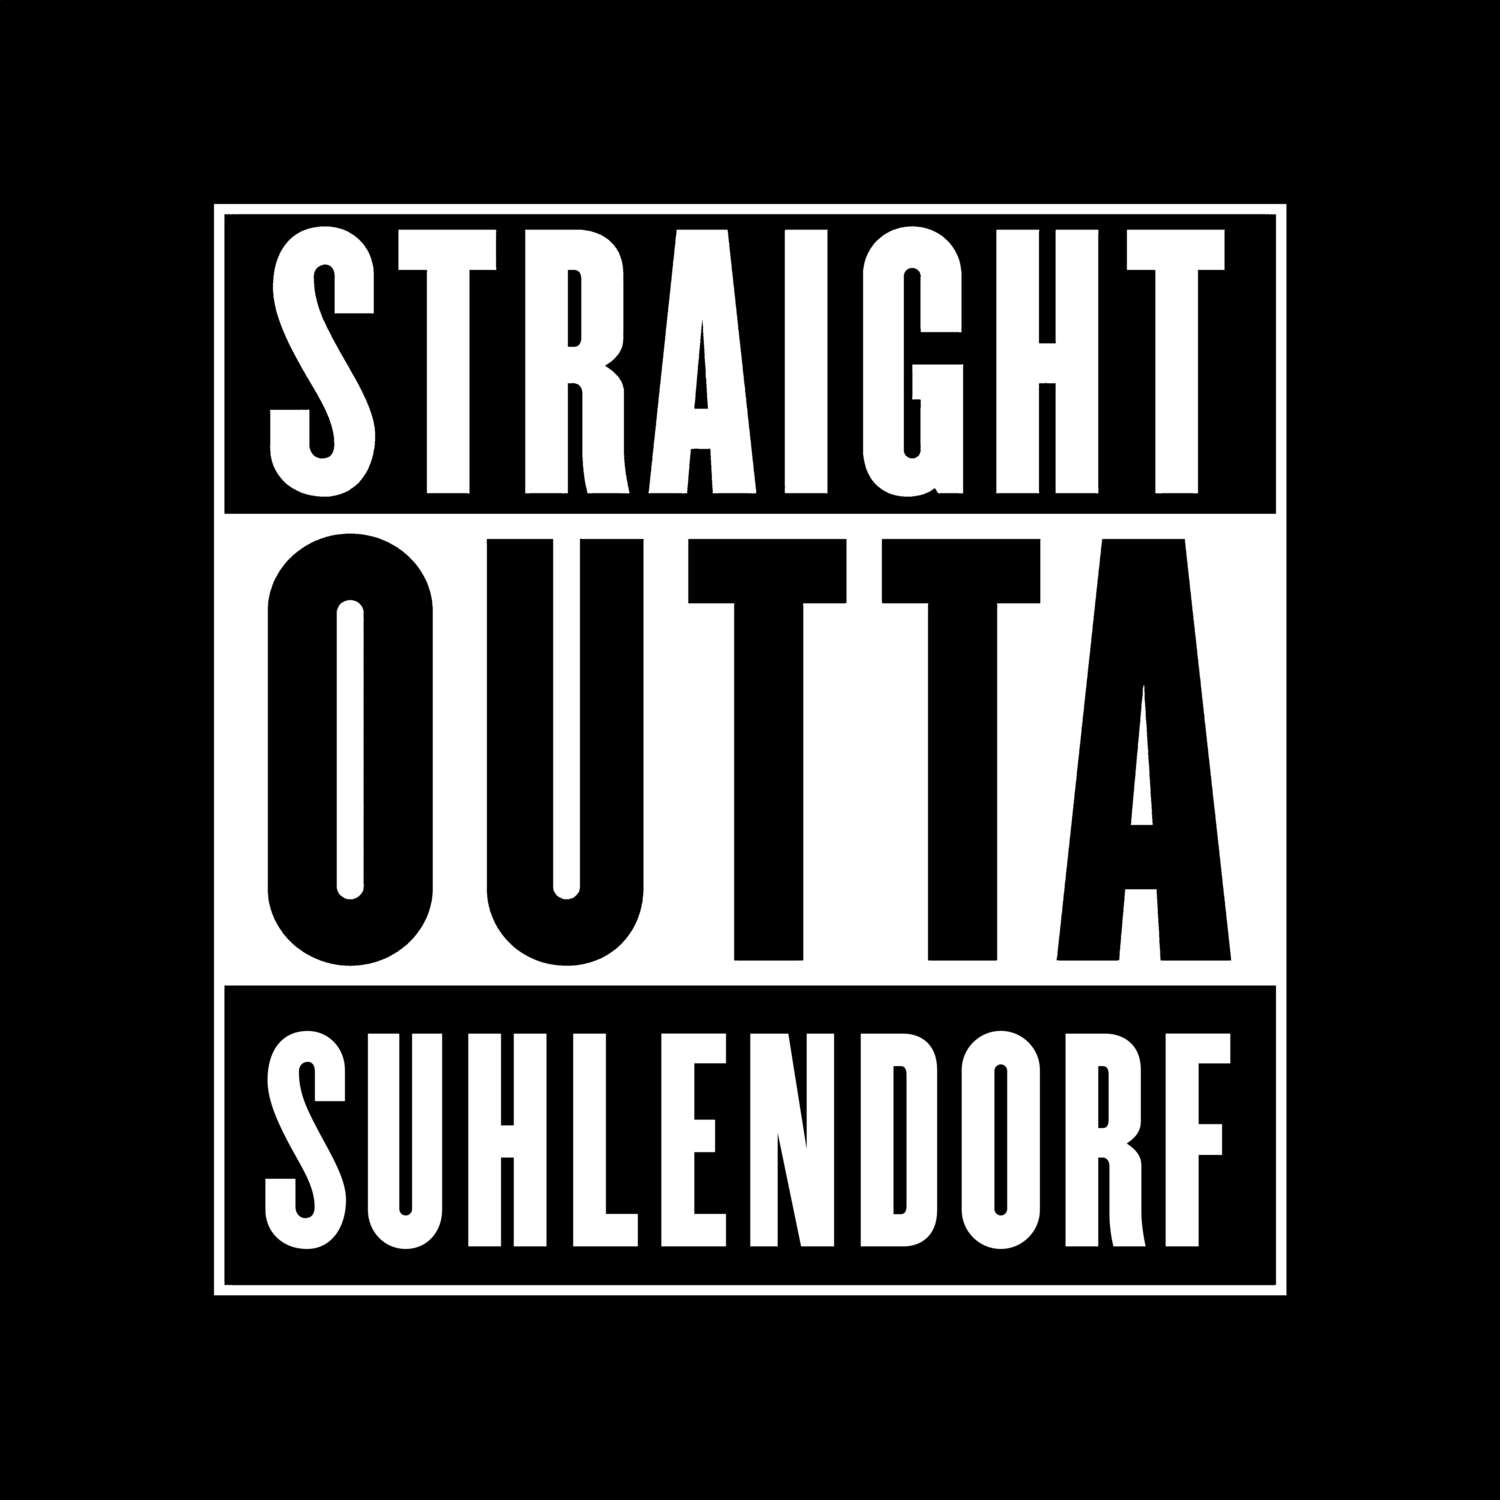 Suhlendorf T-Shirt »Straight Outta«